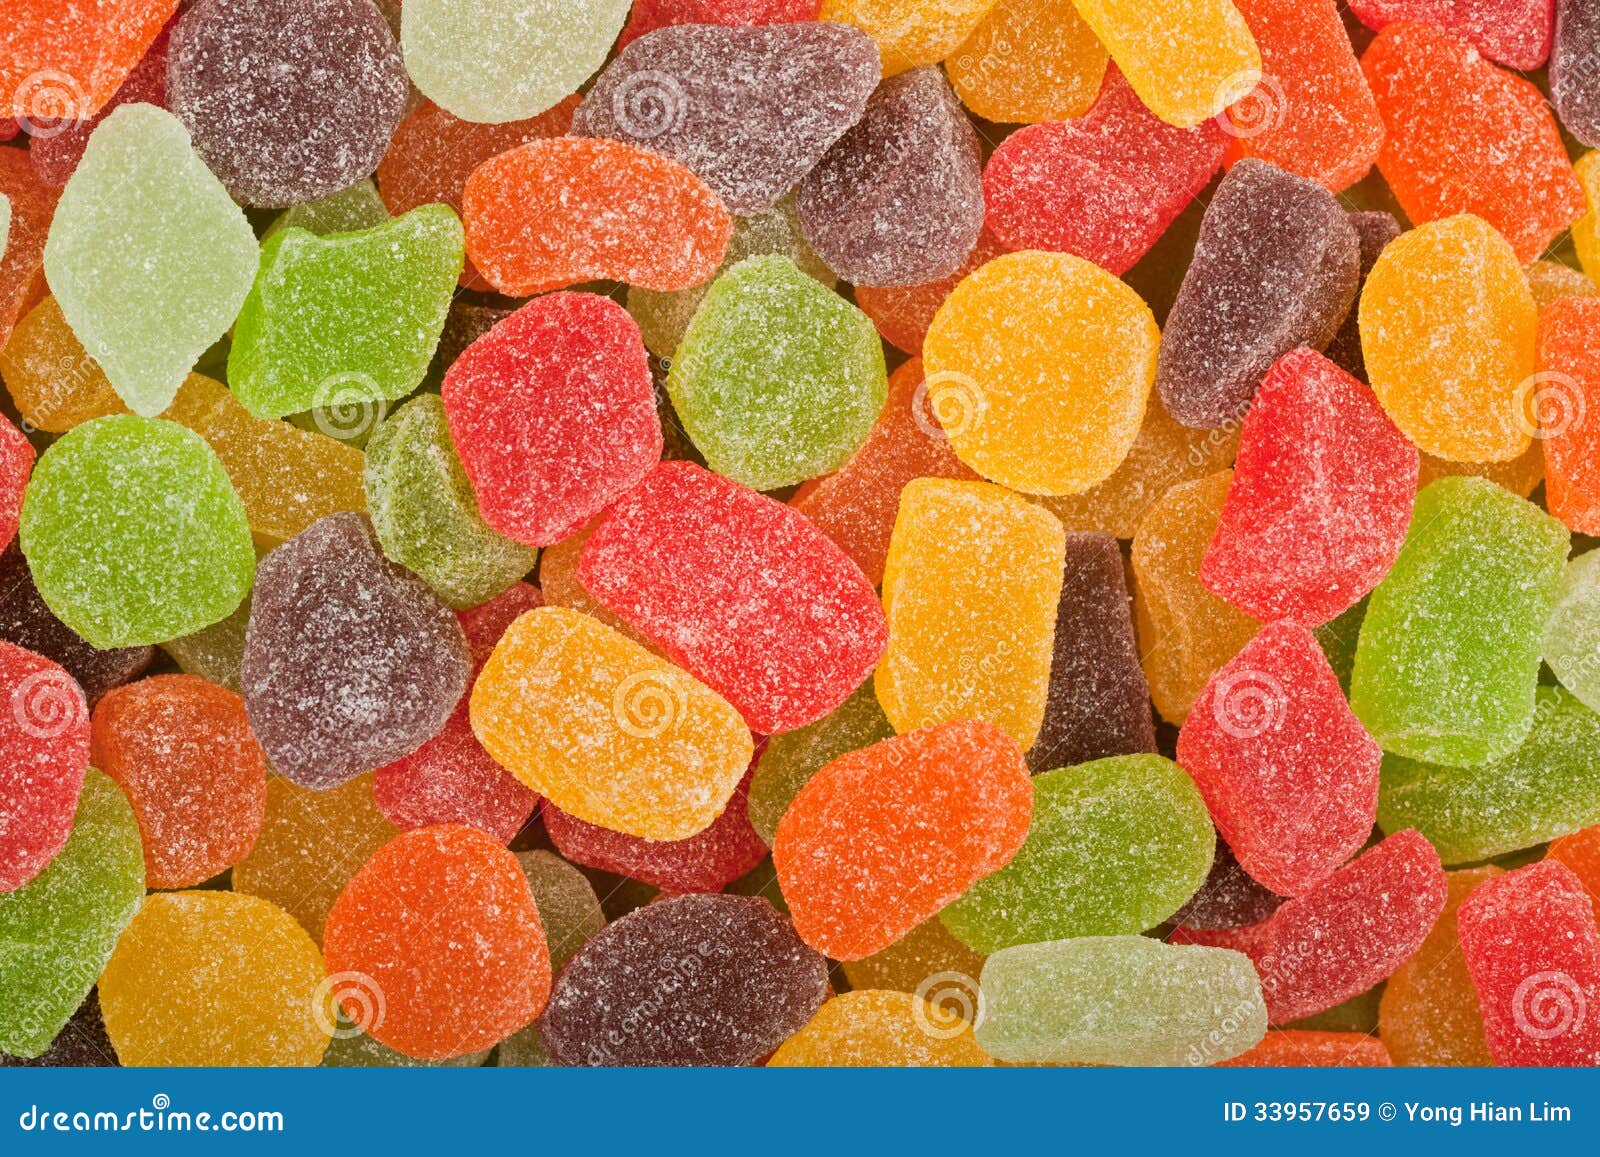 gummy candy background